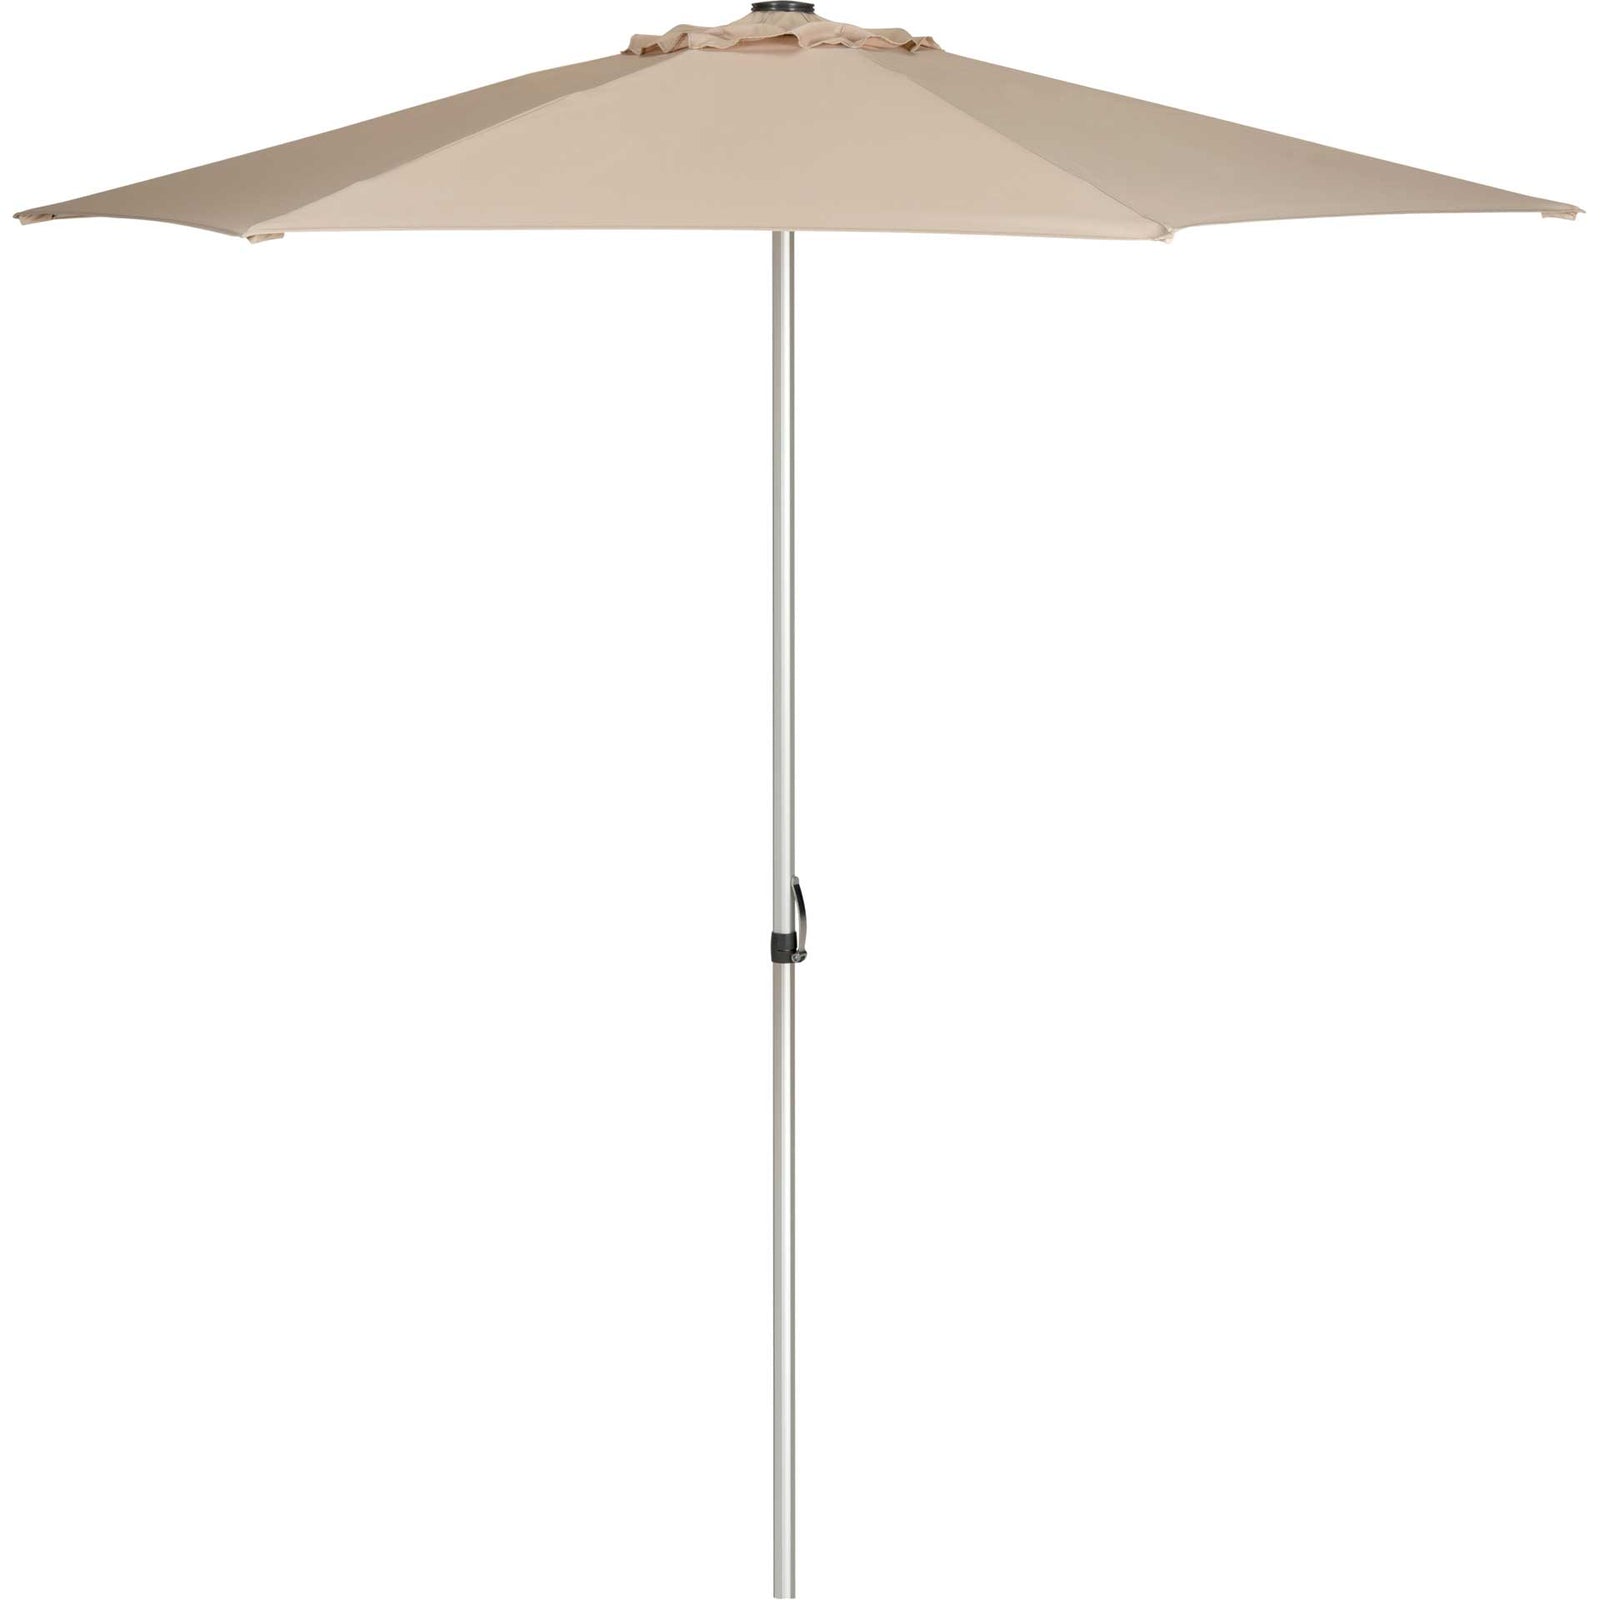 Hugh Uv Resistant Easy Glide Market Umbrella Beige